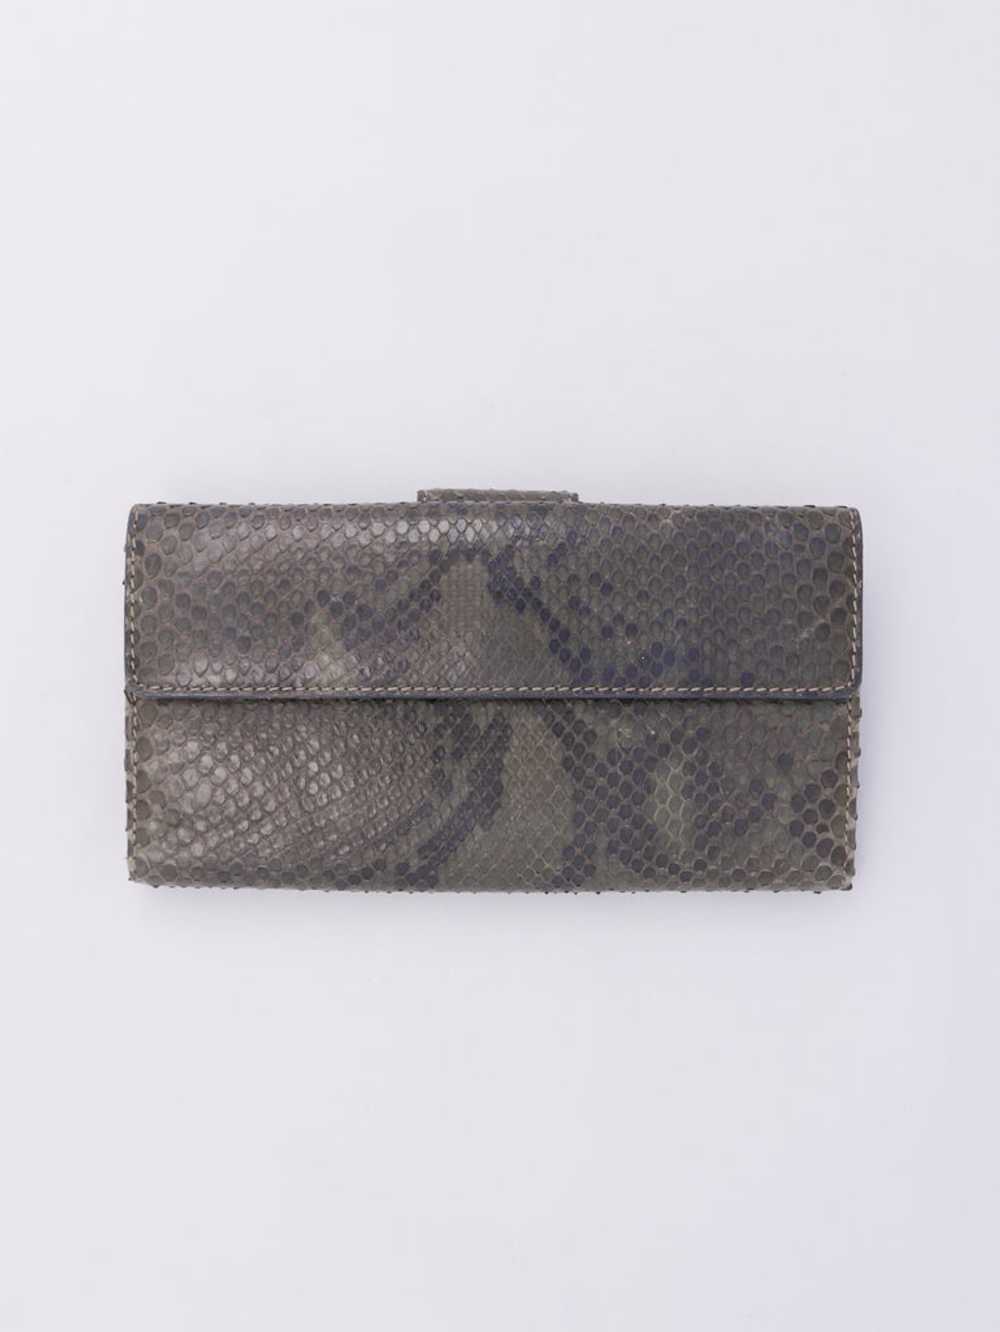 Gucci Python Clutch Wallet - image 7